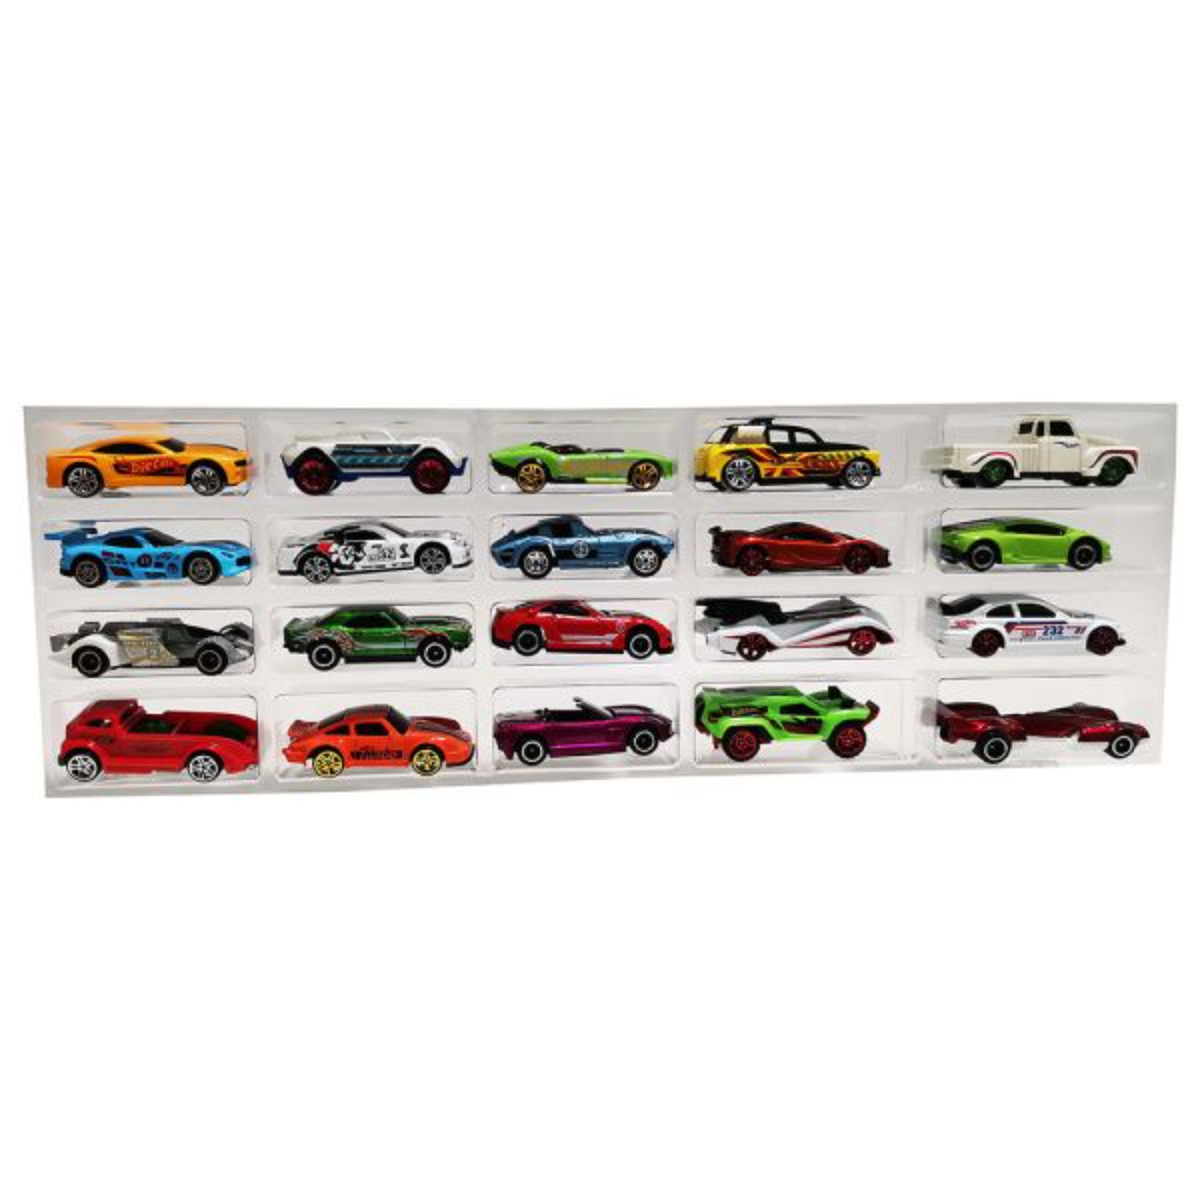 TTC Diecast Super Cars, 20 pcs, Multicolour